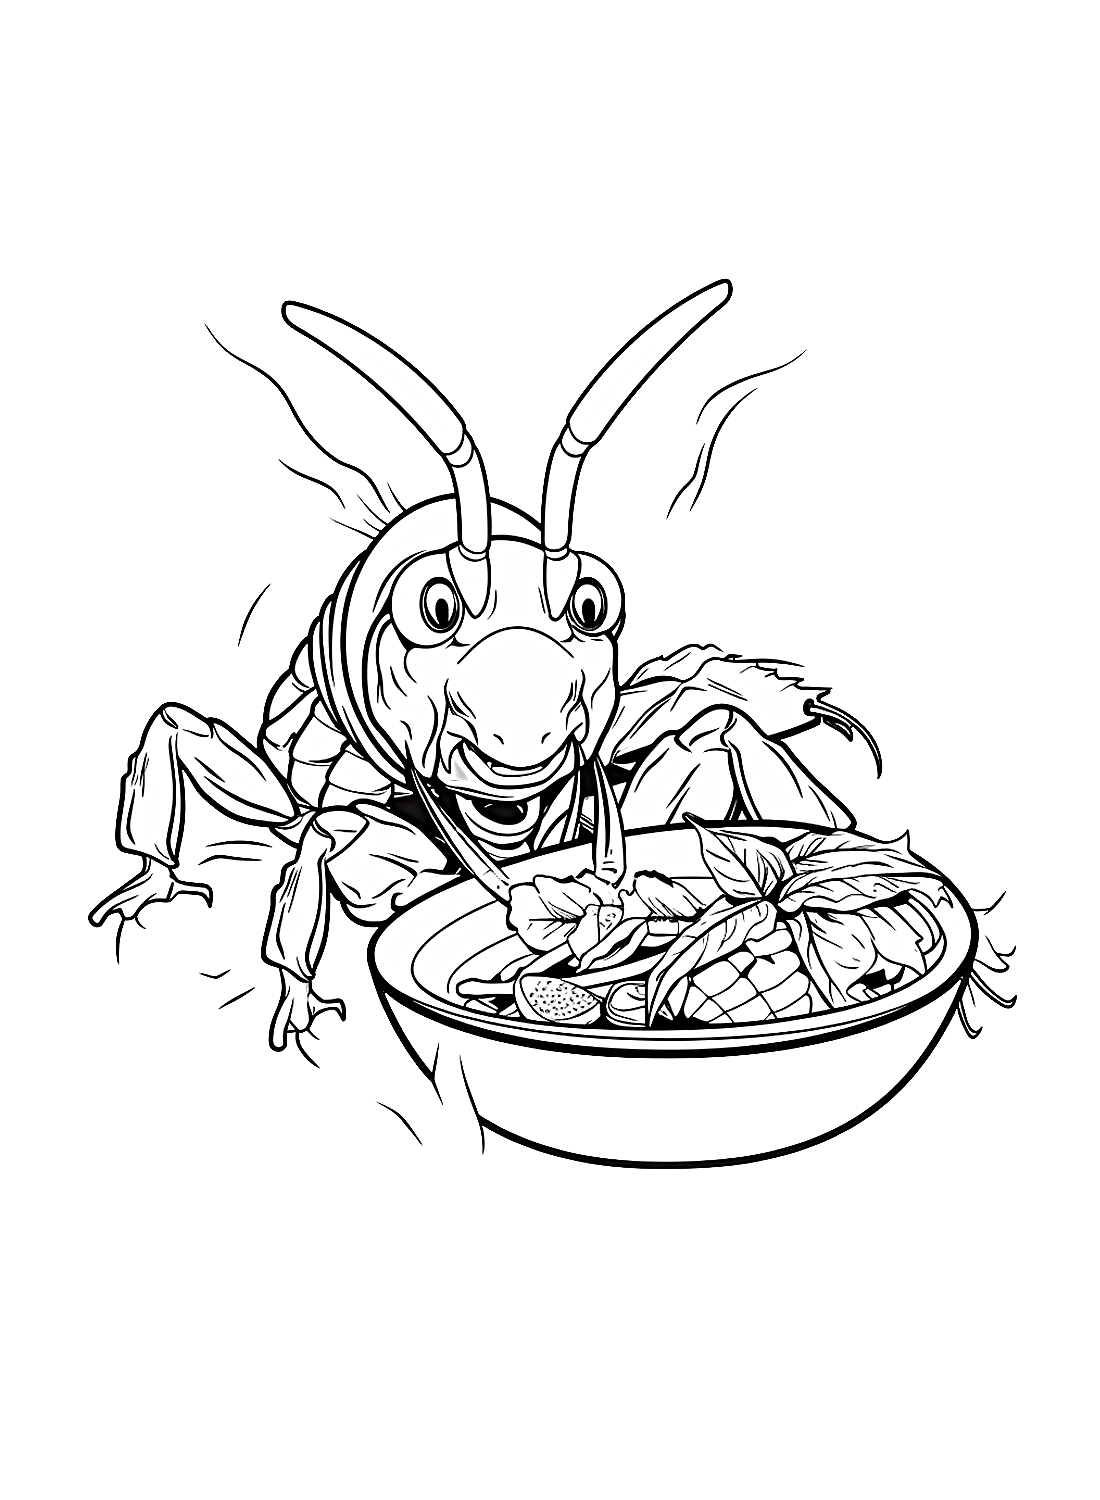 Kakkerlak eet groente van Kakkerlak